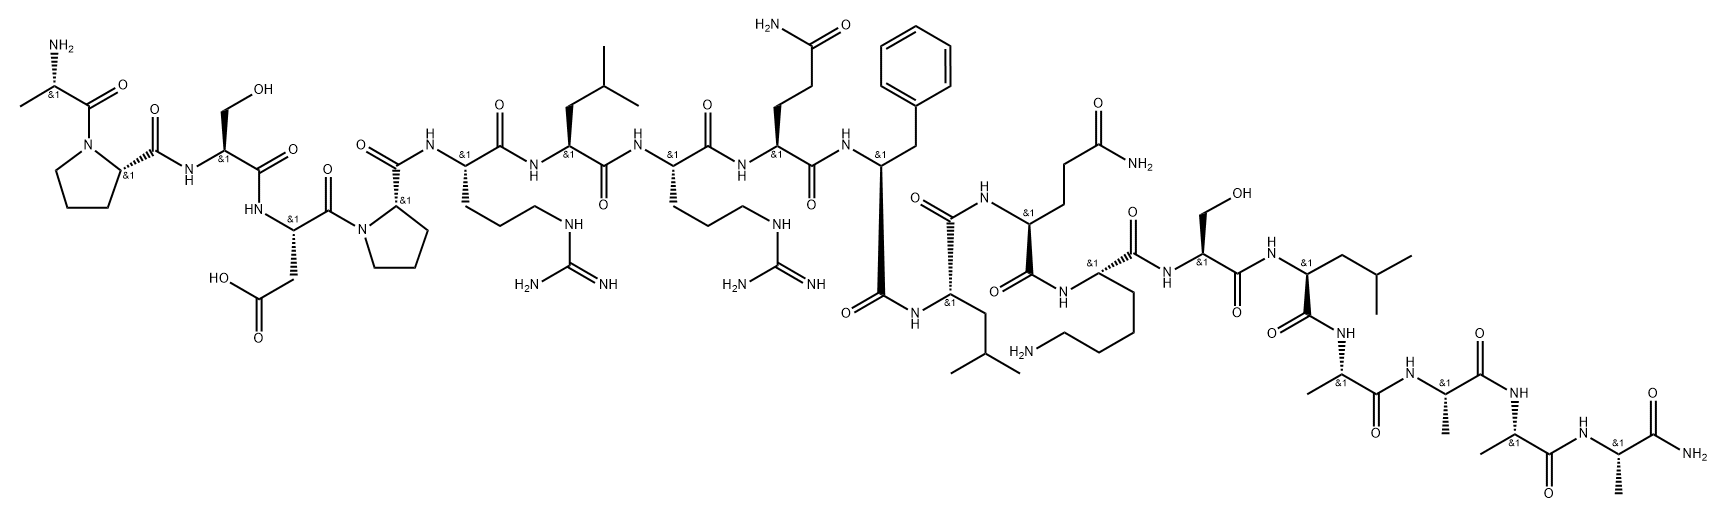 Neuronostatin-19 (human, canine, porcine) Struktur